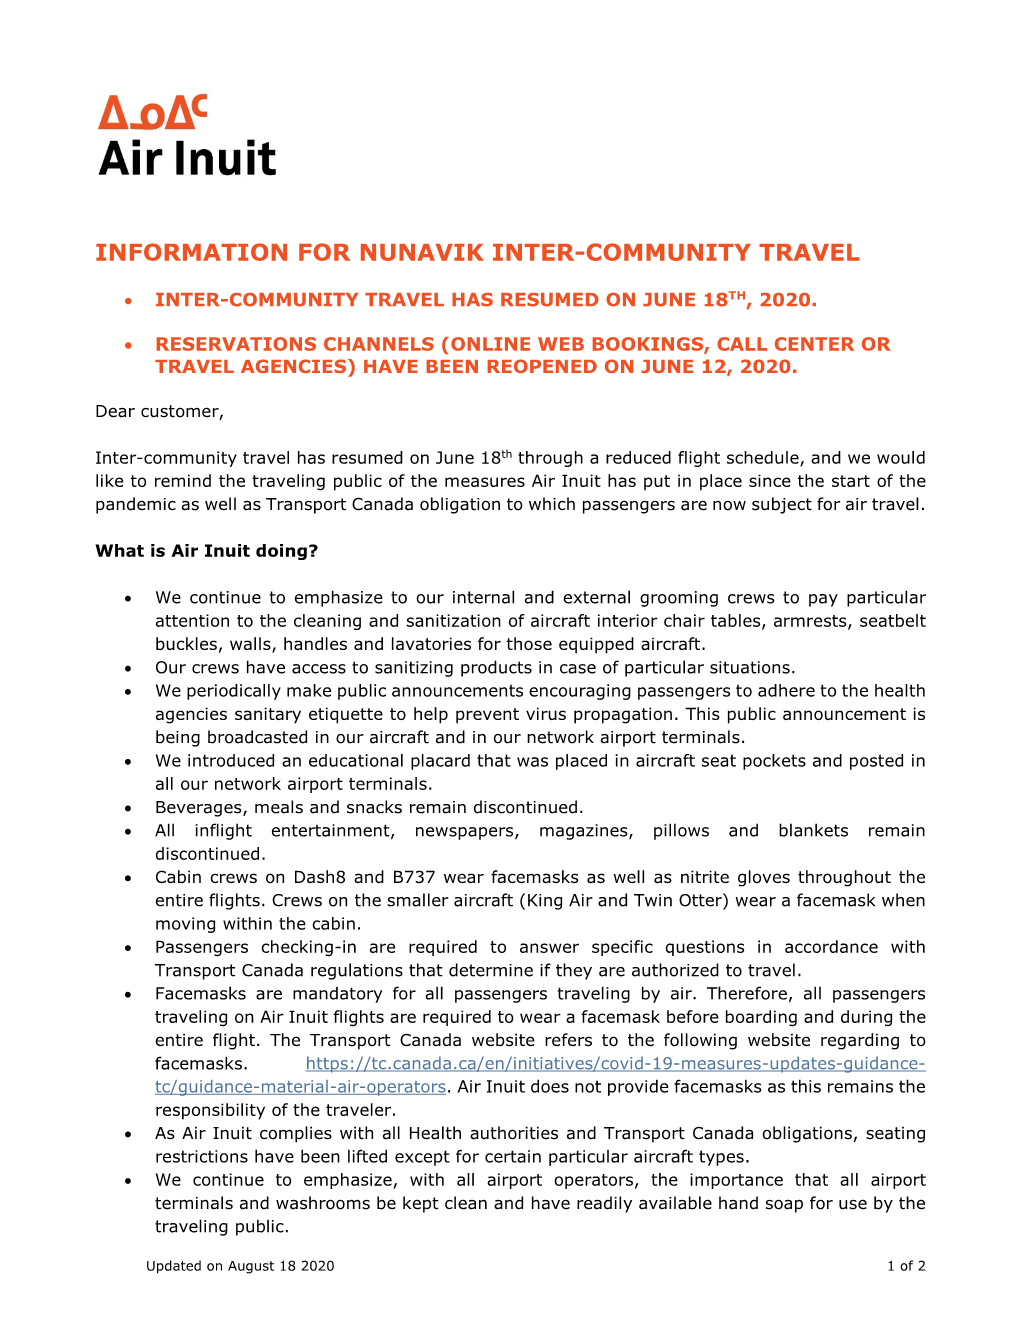 Information for Nunavik Inter-Community Travel